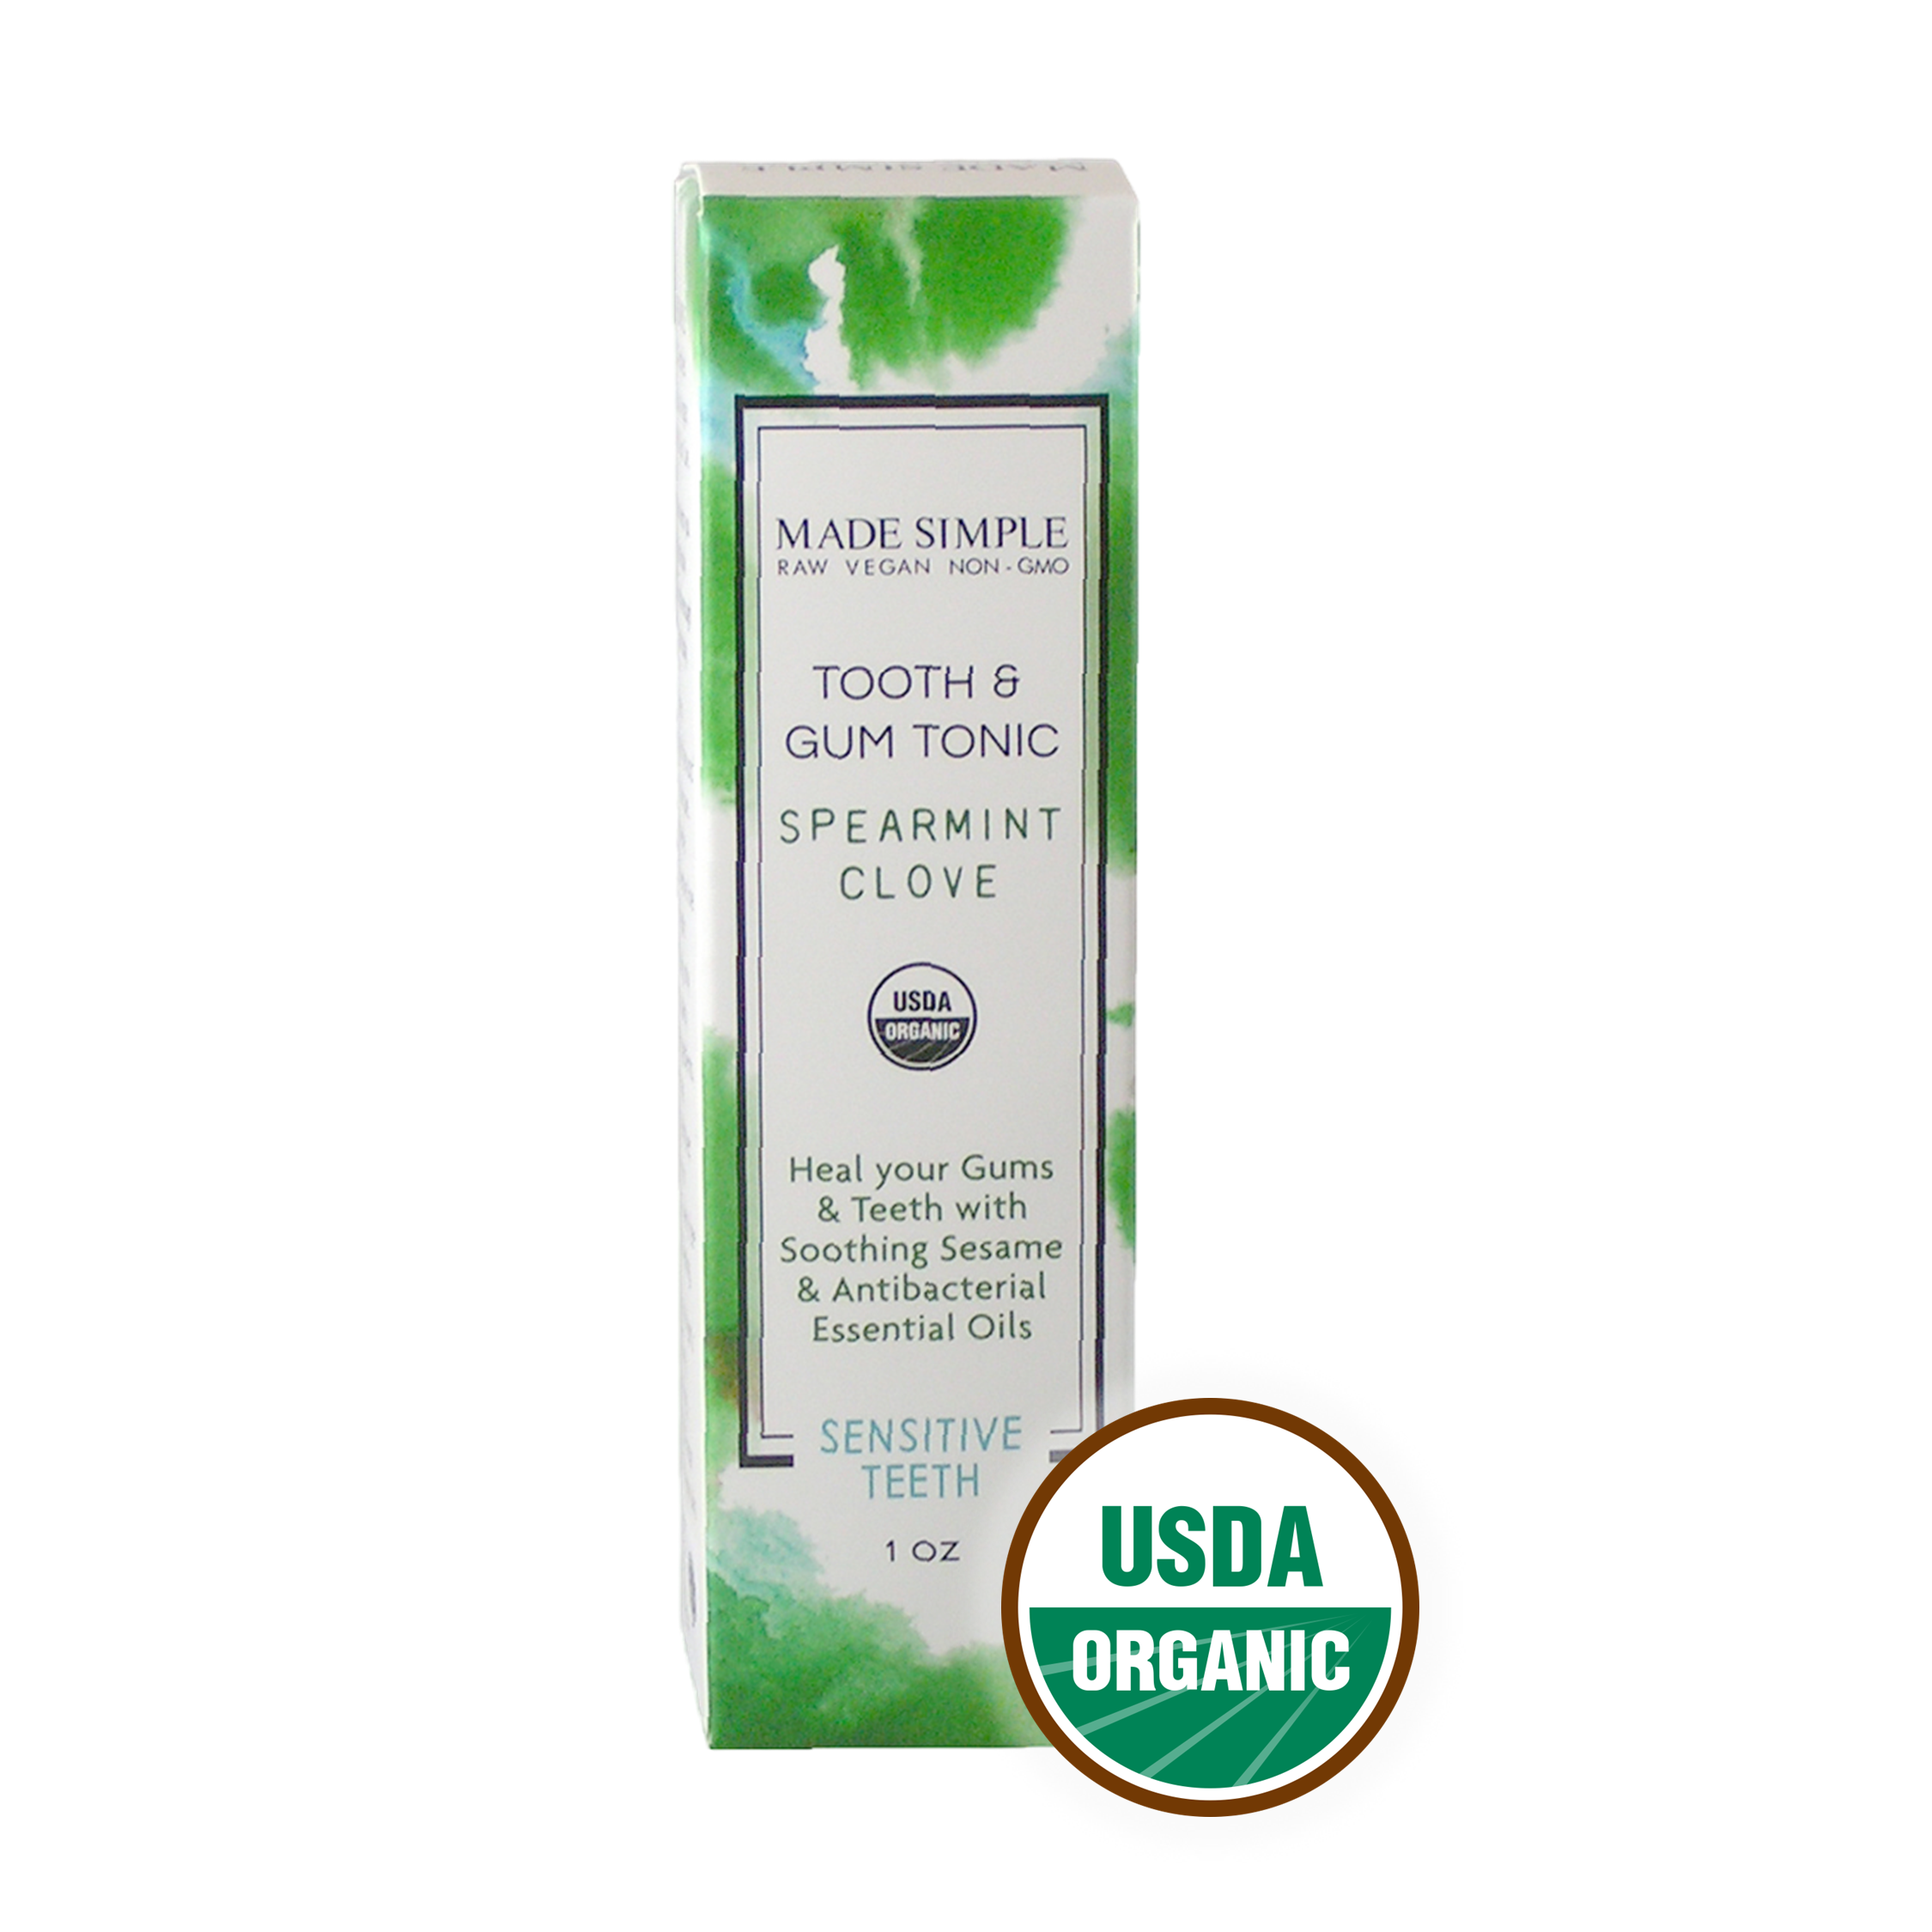 Made-Simple-Skin-Care-Tooth-Gum-Tonic-Spearmint-Clove-USDA-Certified-Organic-Raw-Vegan-NonGMO boxst